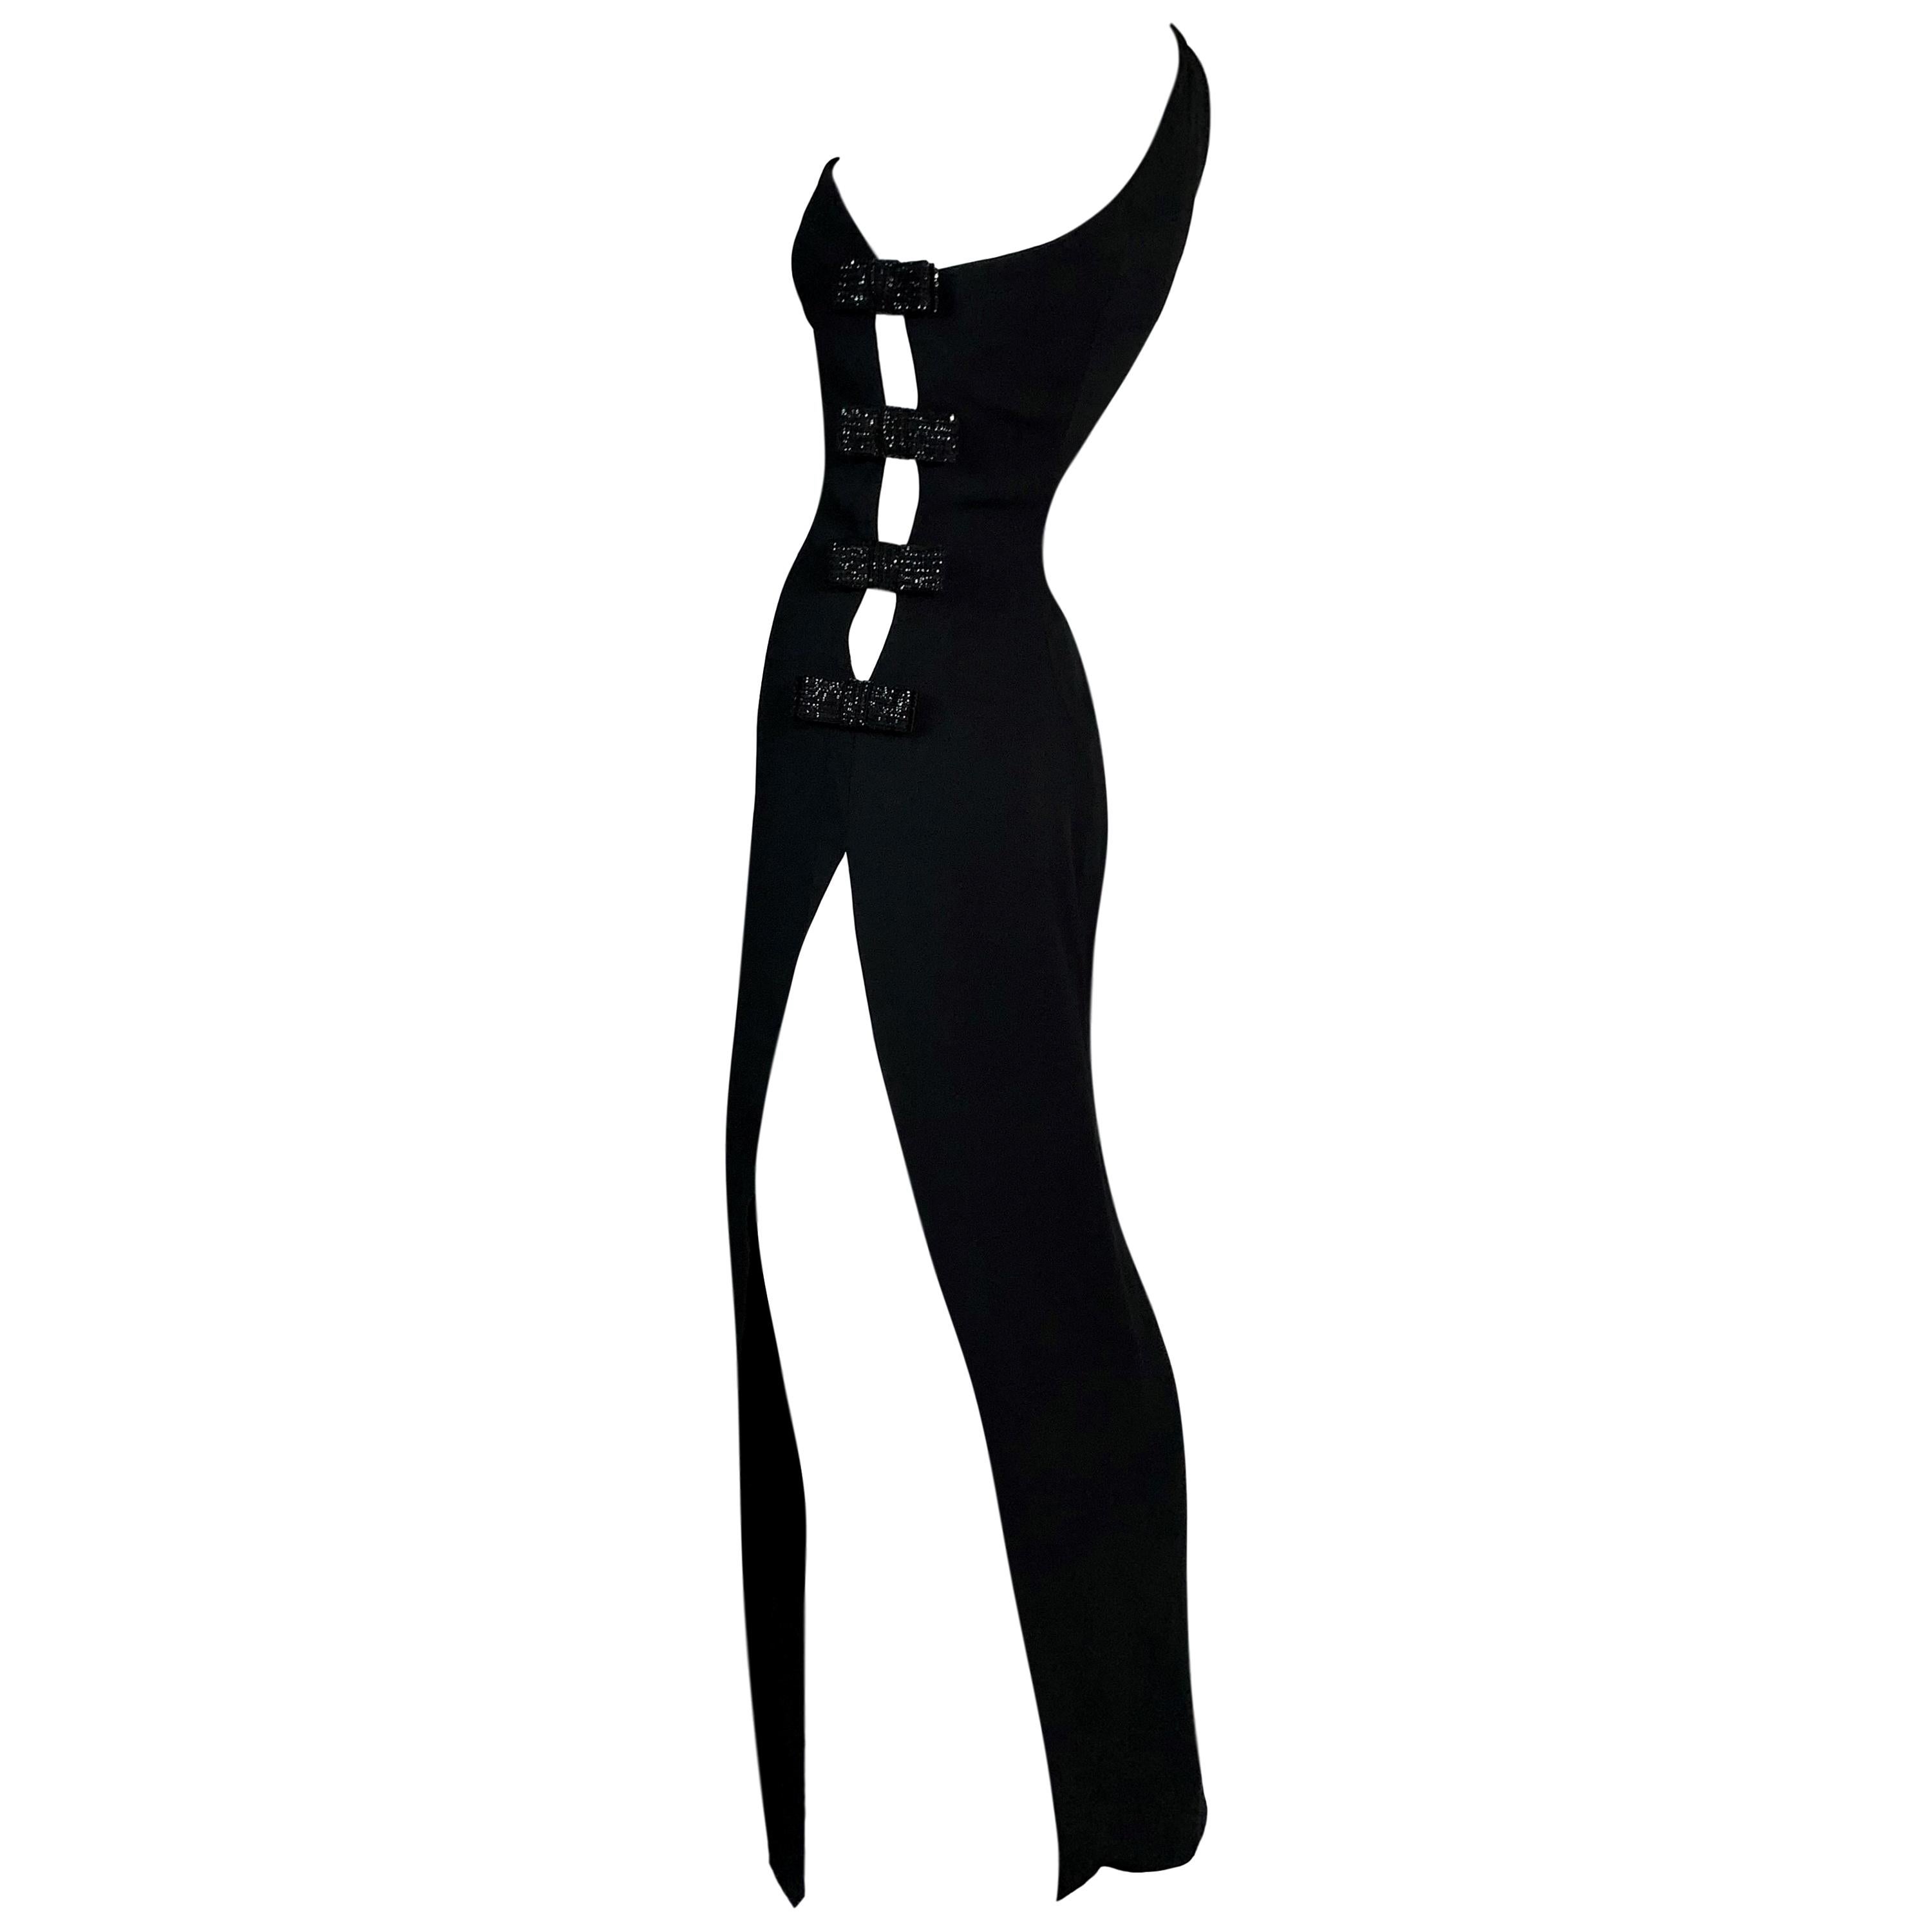 S/S 1997 Christian Dior Runway Black One Shoulder Cut-Out High Slit Maxi Dress